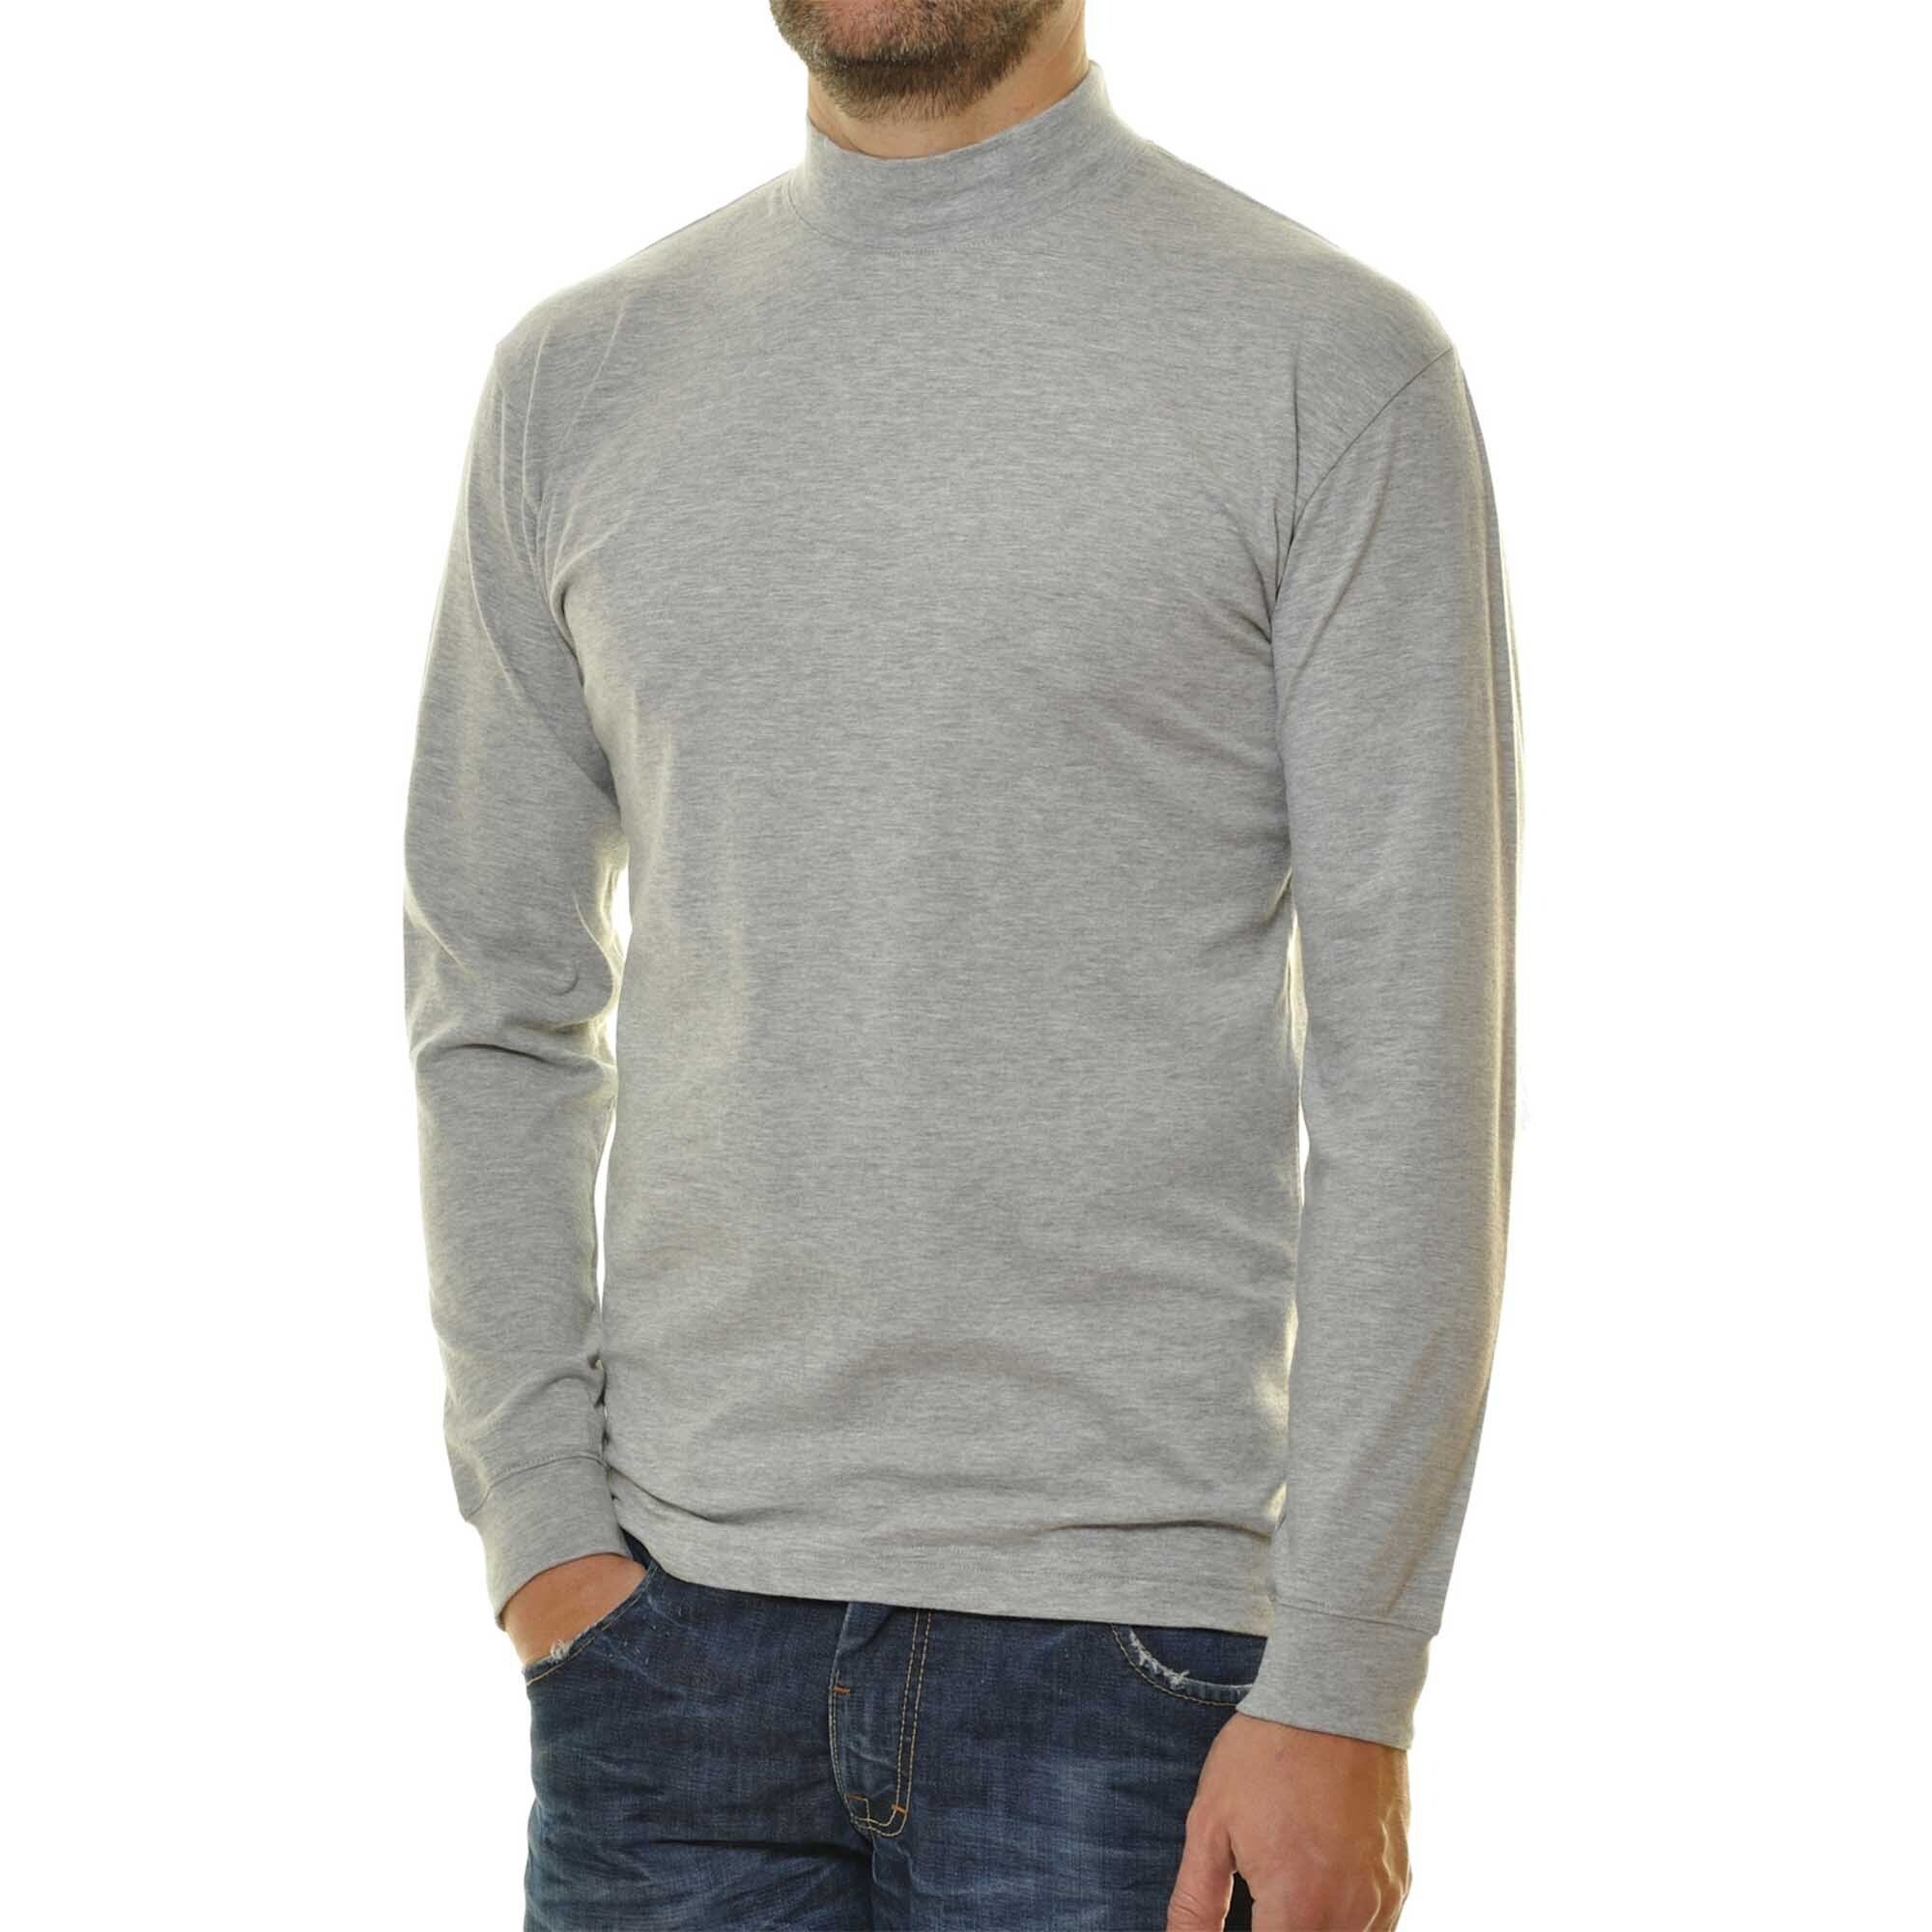 Grau Langarm Herren Melange RAGMAN - Stehkragen-Pullover Basic Sweatshirt